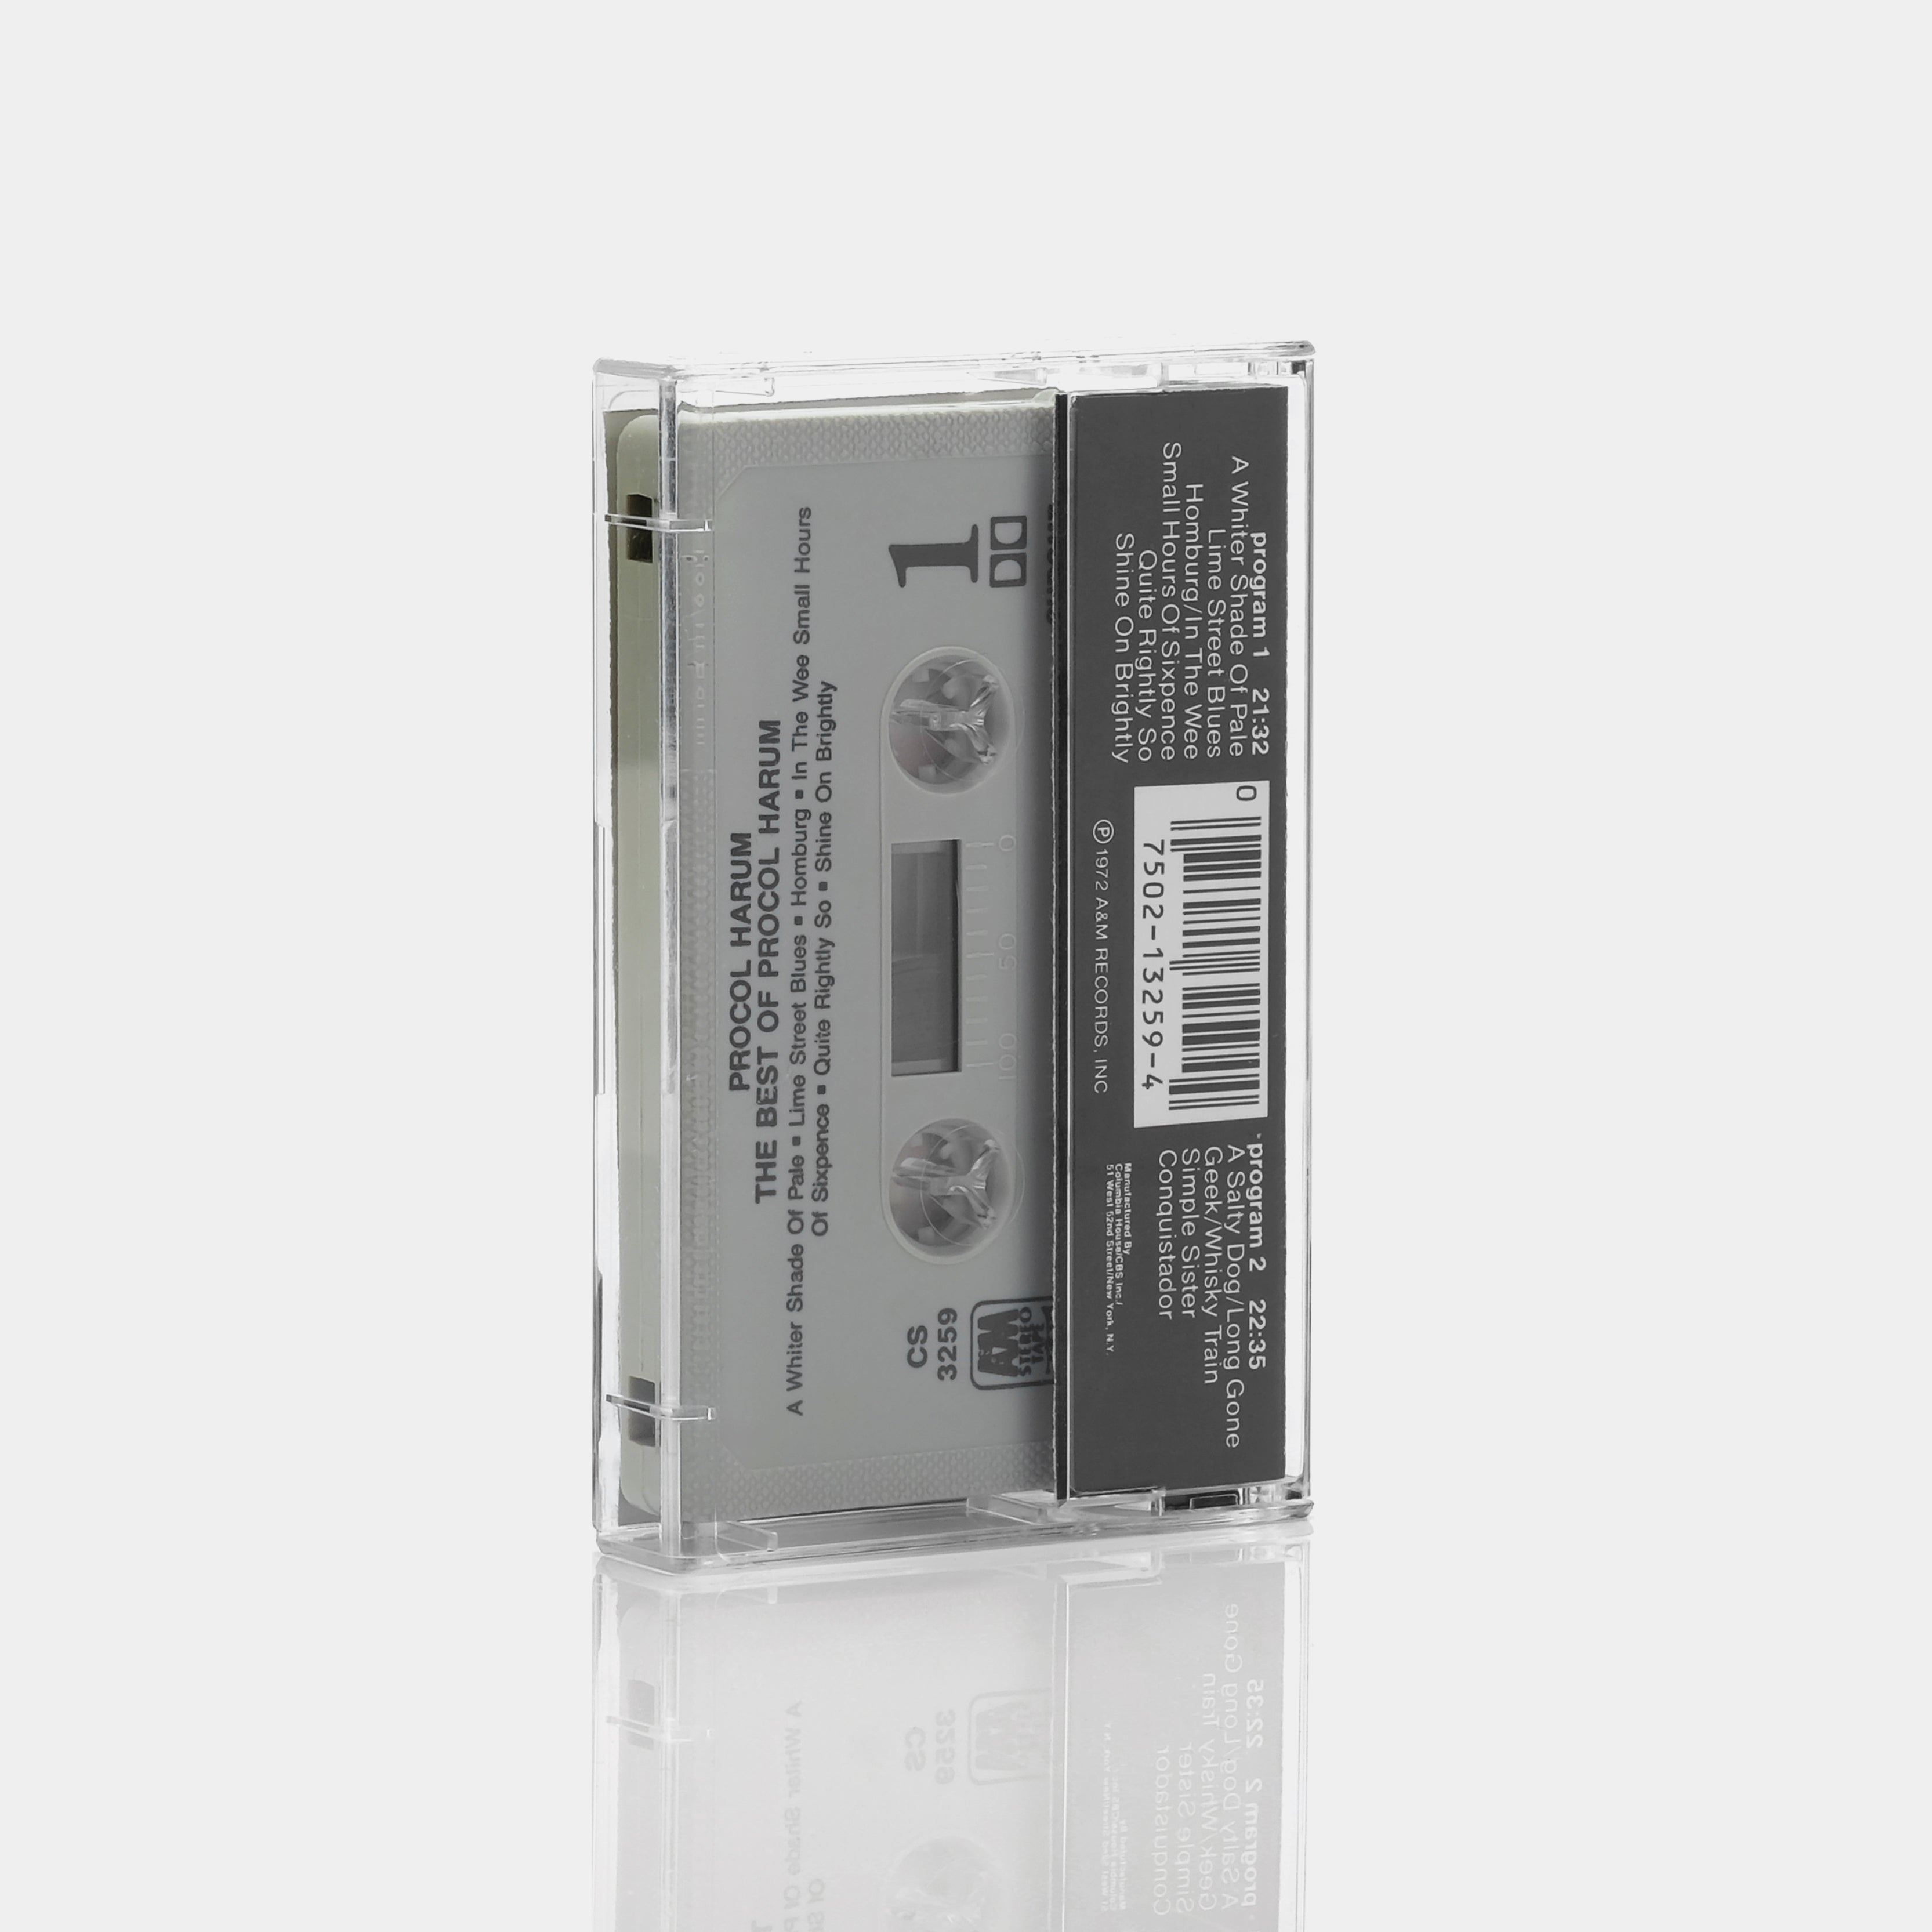 Procol Harum - The Best Of Procol Harum Cassette Tape